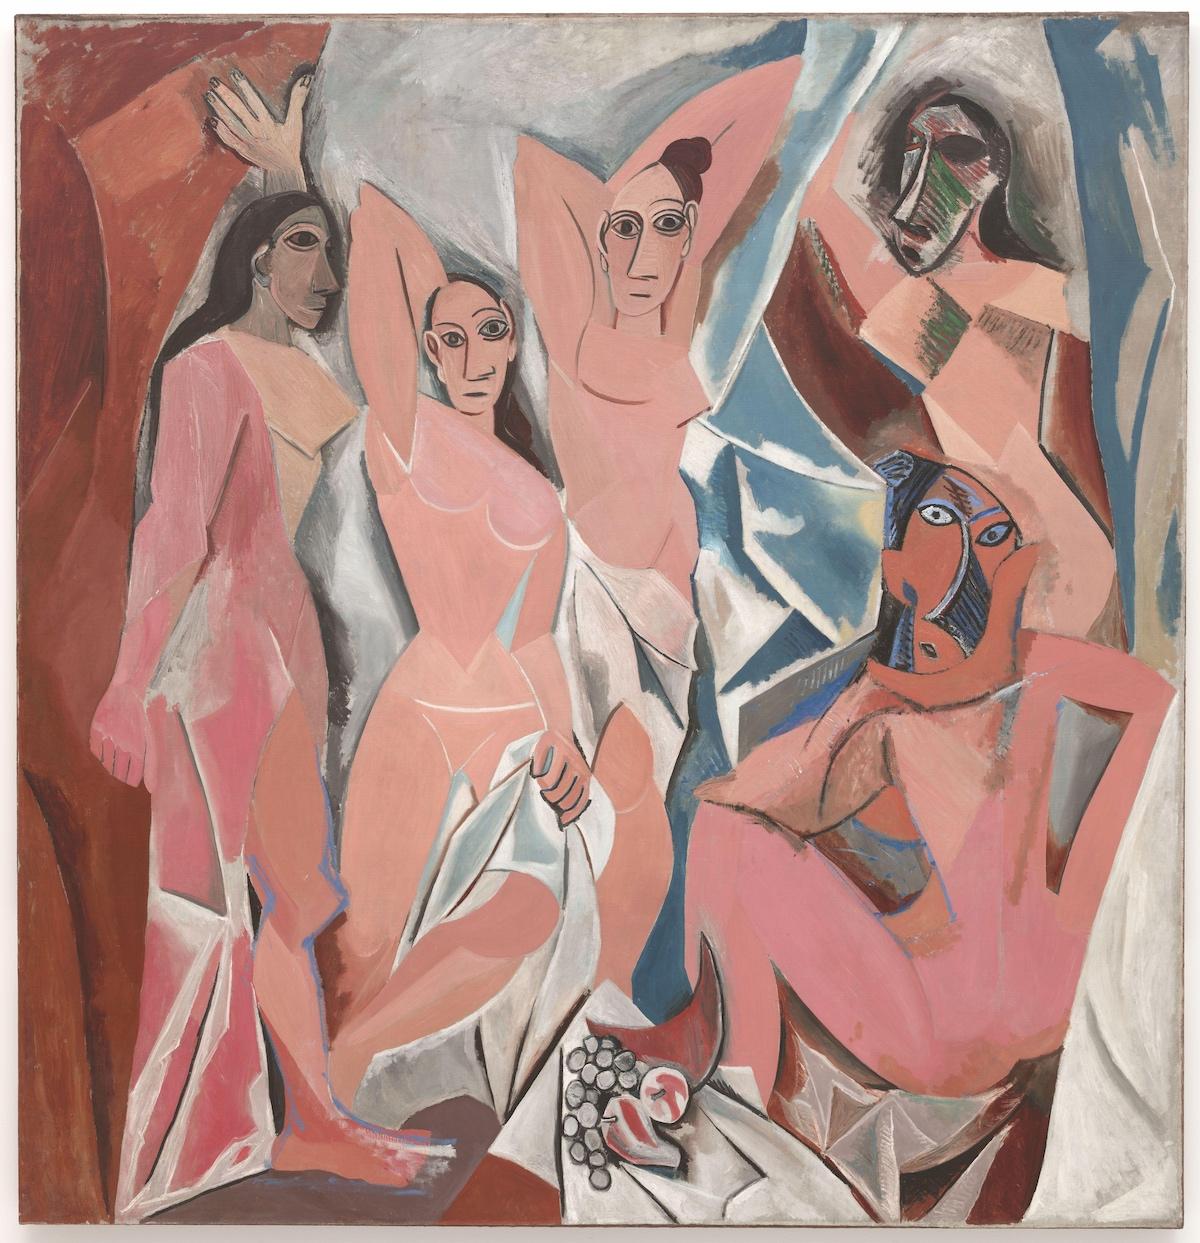 Pablo Picasso, Les Demoiselles d’Avignon, 1907. Oil on canvas, 96.1 x 92.1 in. (244 x 234 cm.), Museum of Modern Art, New York City, New York. Wikipedia. 